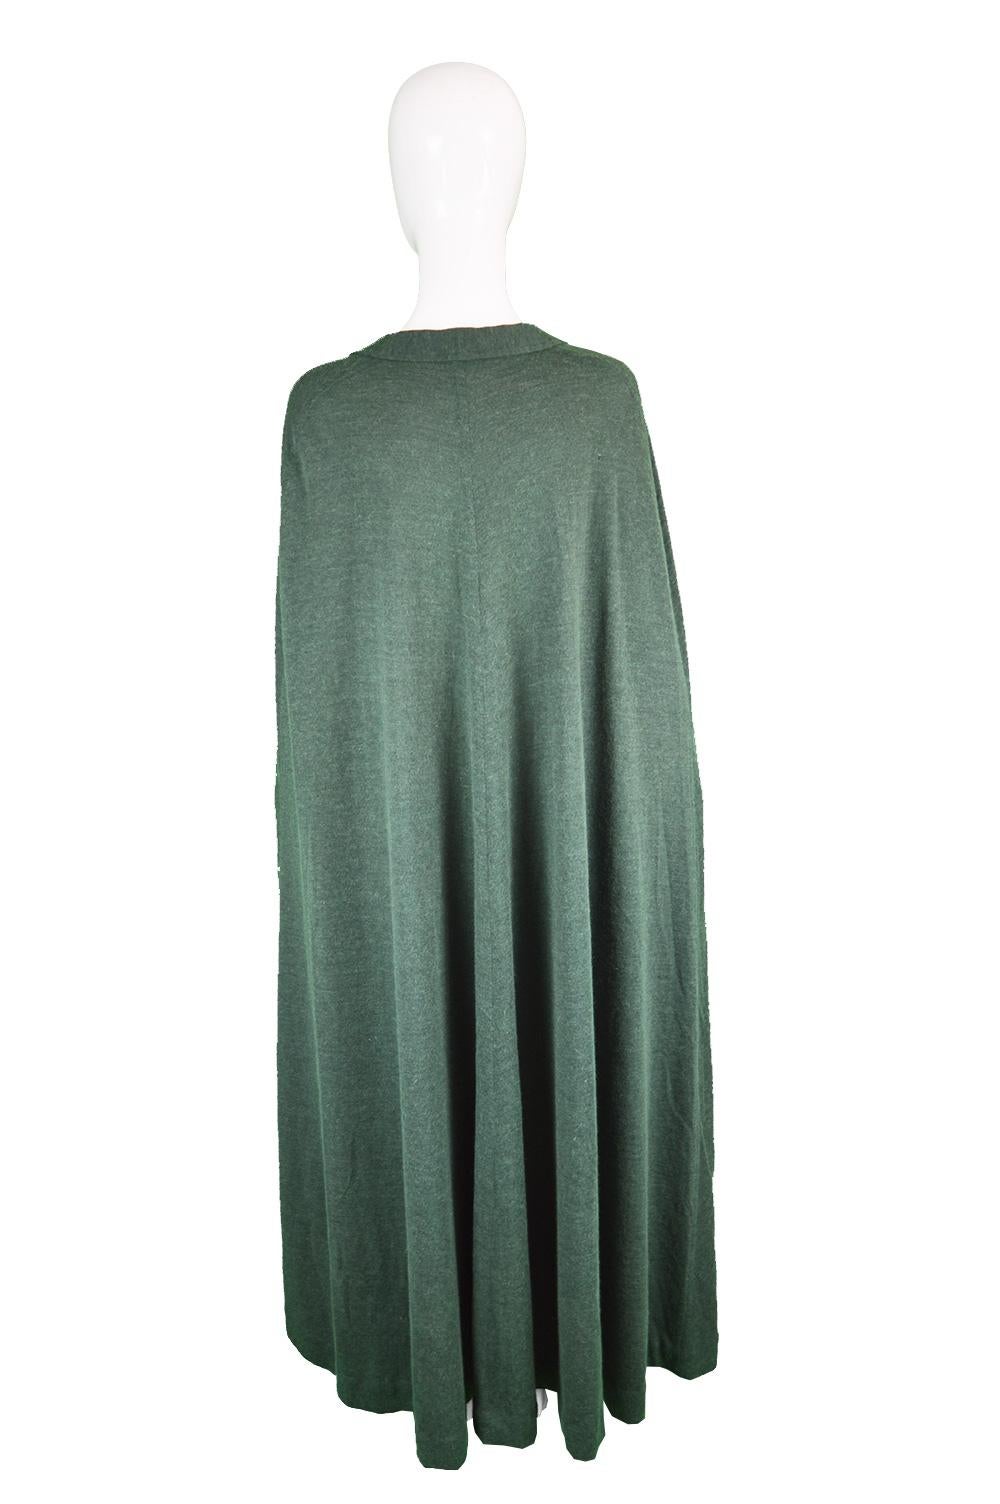 Lanvin Haute Couture Unstructured Green Wool Knit Maxi Cape Cloak, 1970s For Sale 6